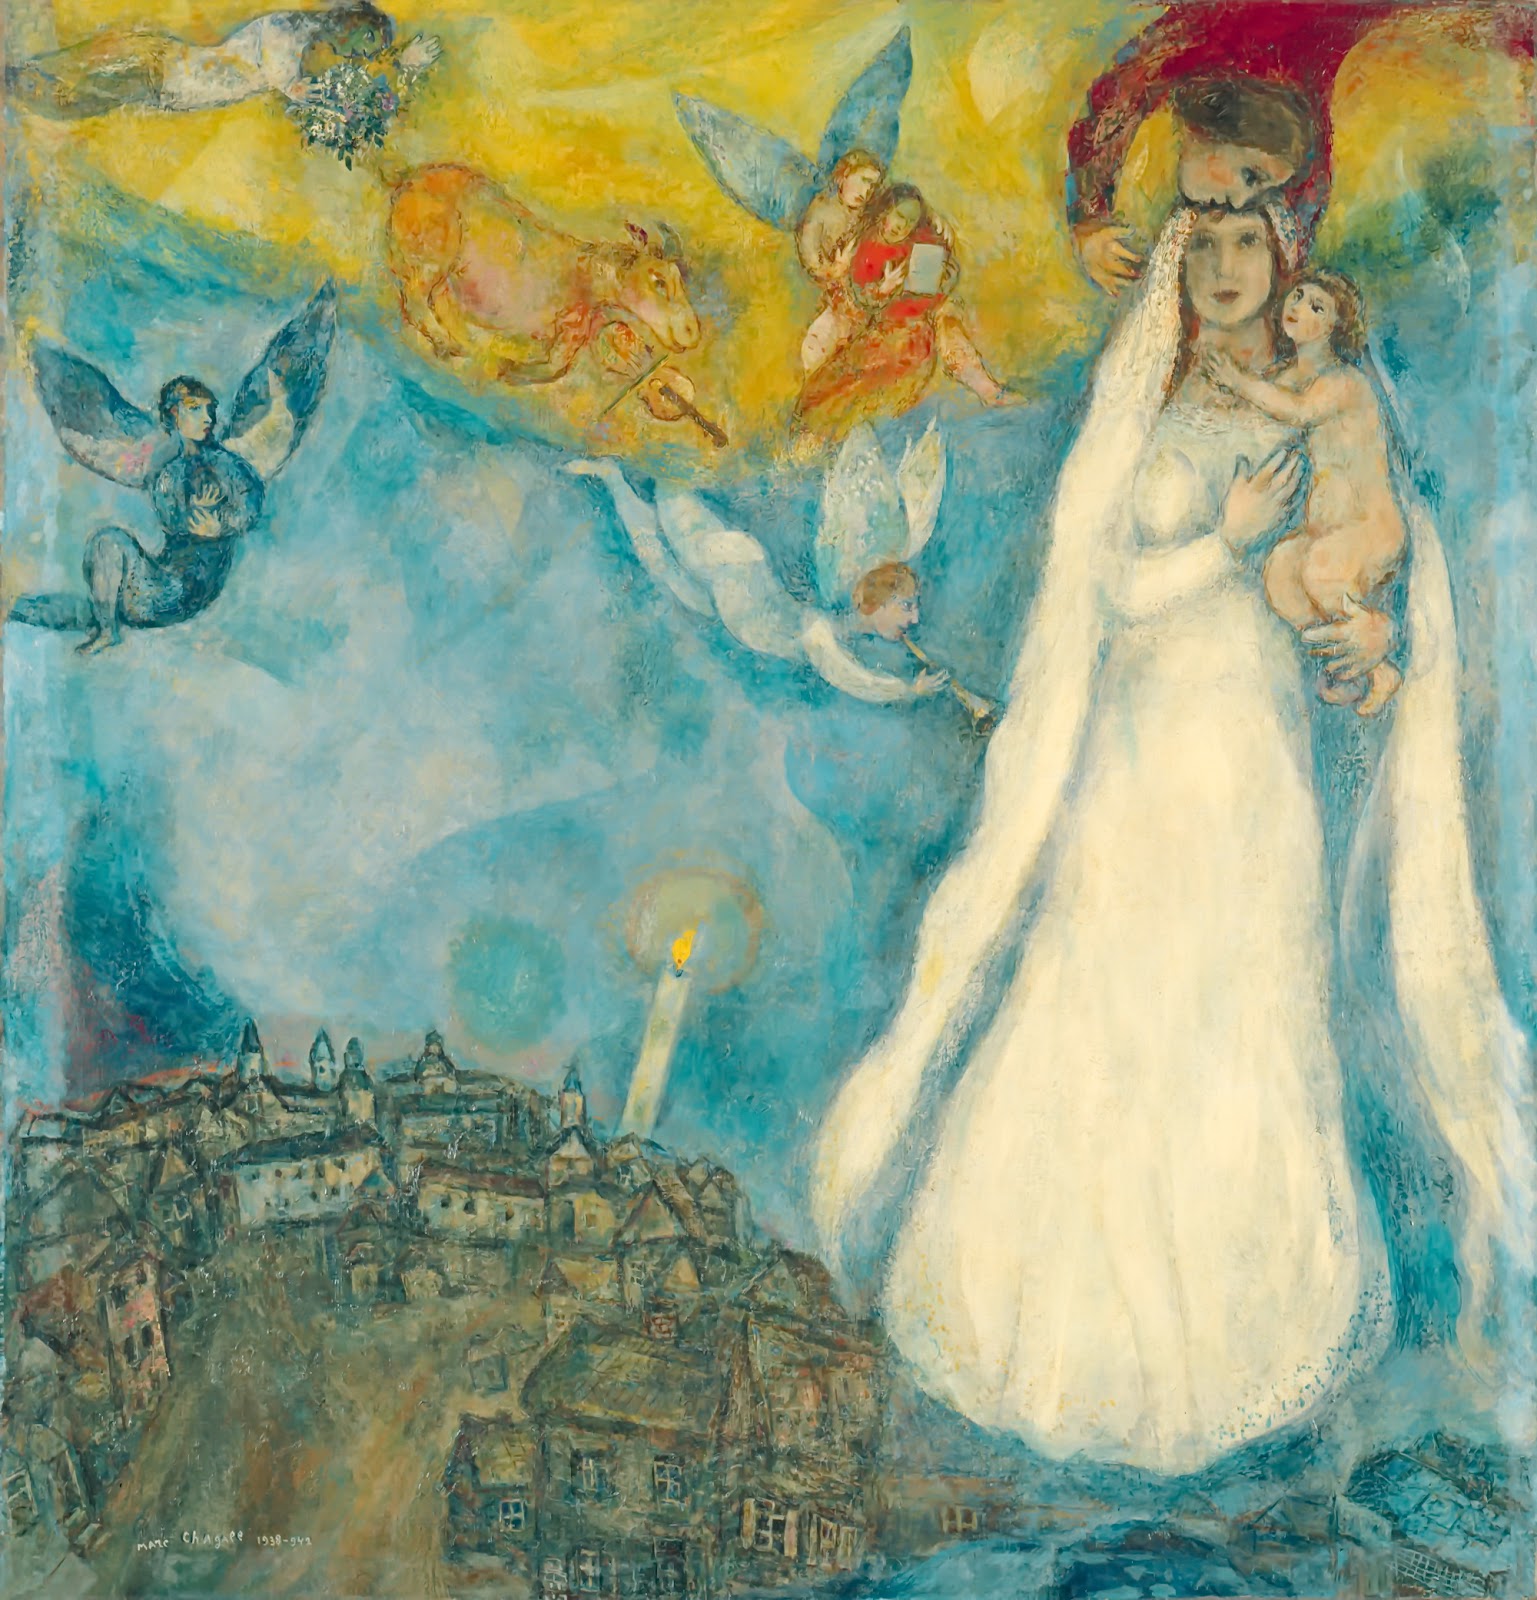 Marc+Chagall-1887-1985 (306).jpg